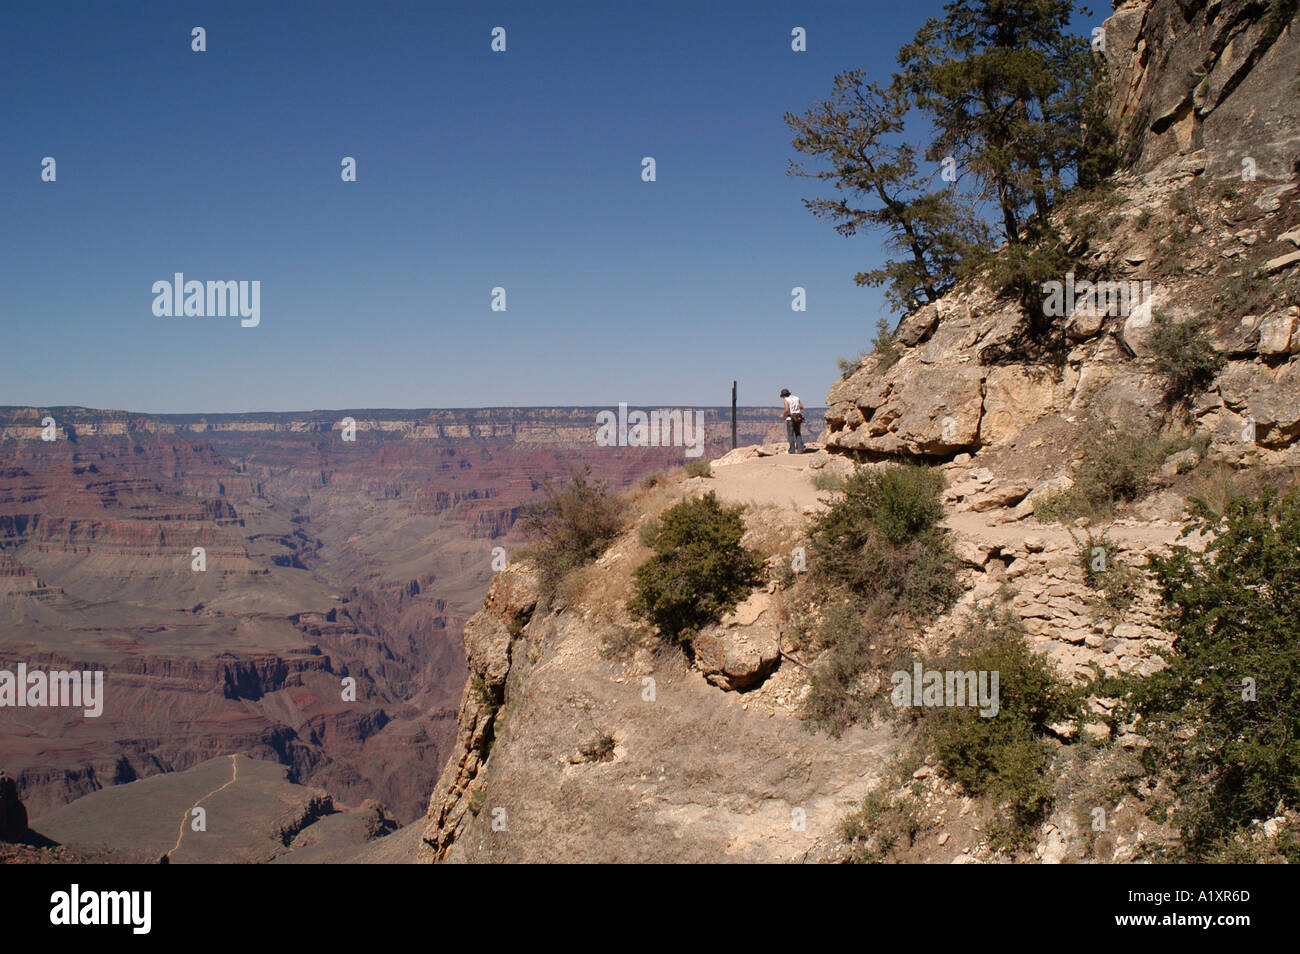 Tourists walking up a precipice the grand canyon, Arizona USA. Stock Photo